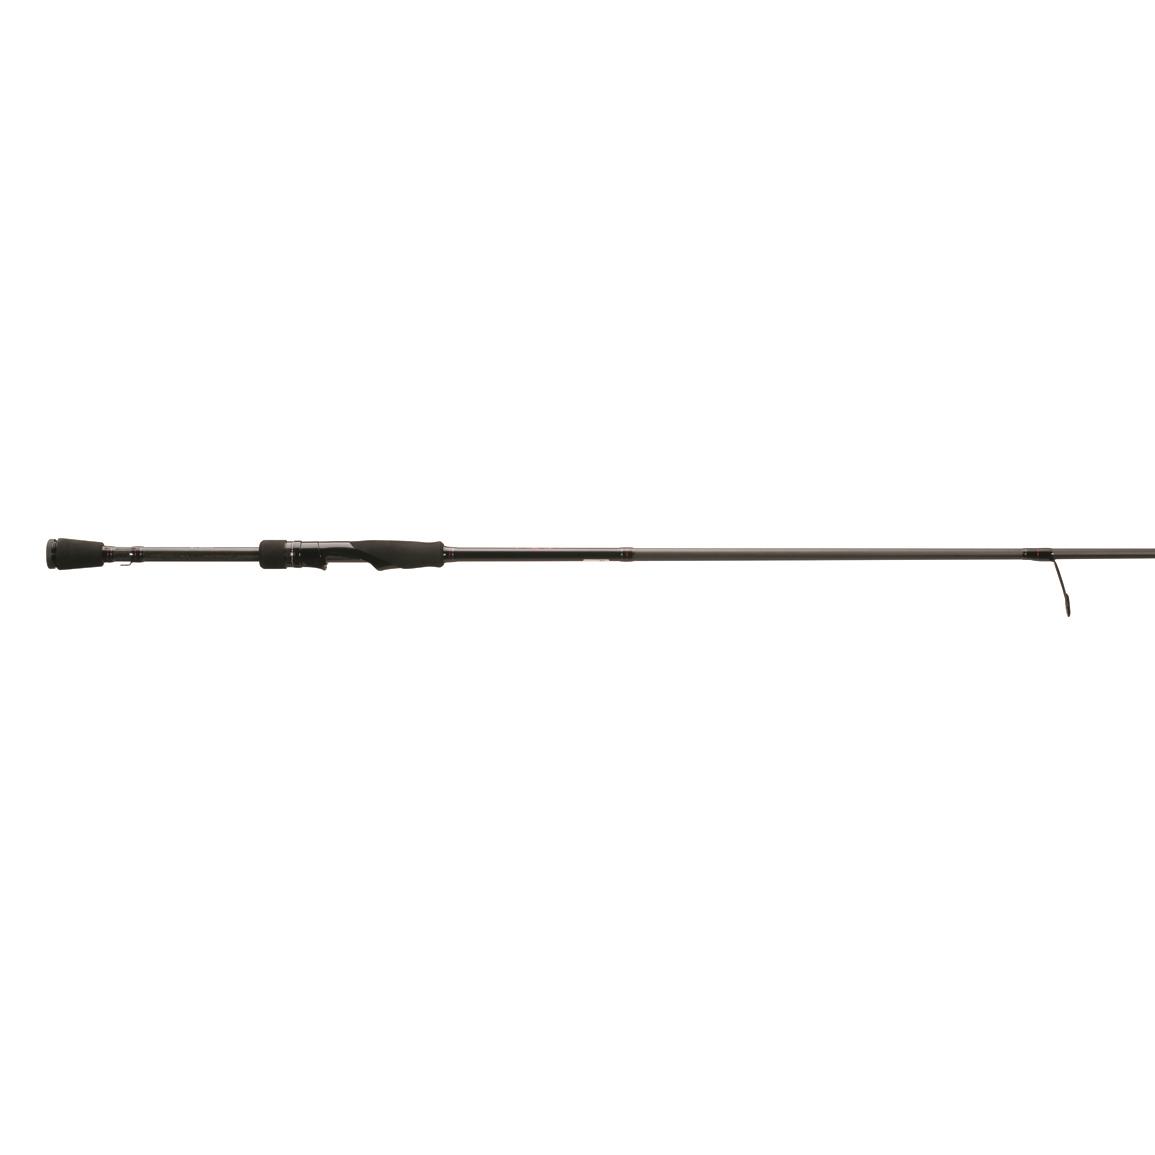 13 Fishing Meta Spinning Rod, 7'2" Length, Medium Heavy Power, Extra Fast Action